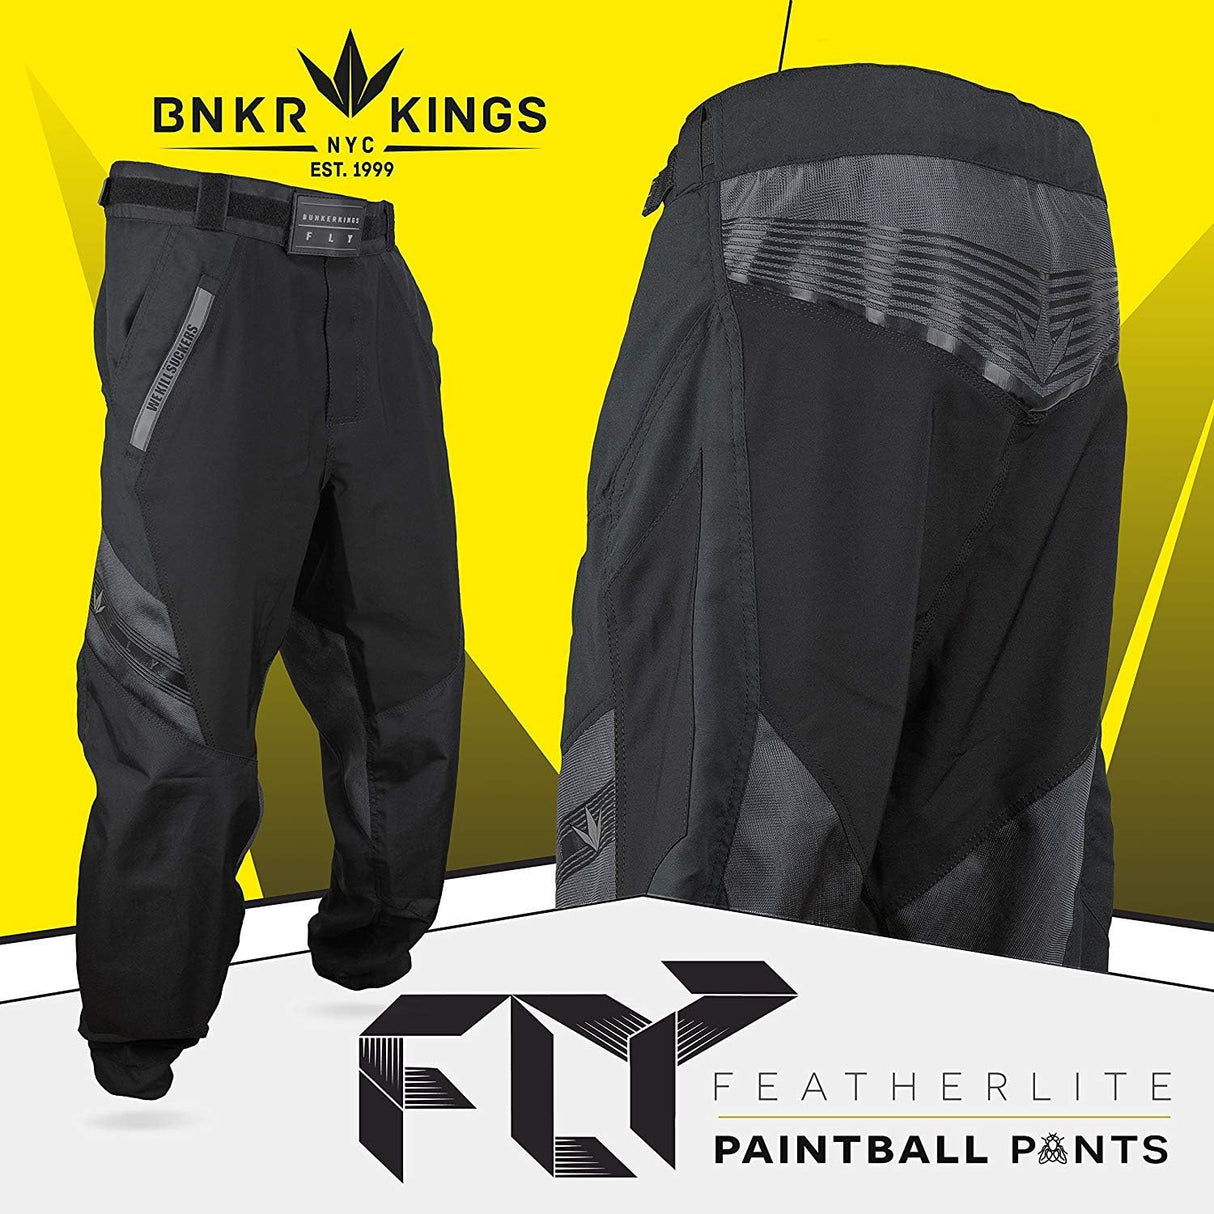 Bunkerkings Featherlite Fly Pantalones de paintball